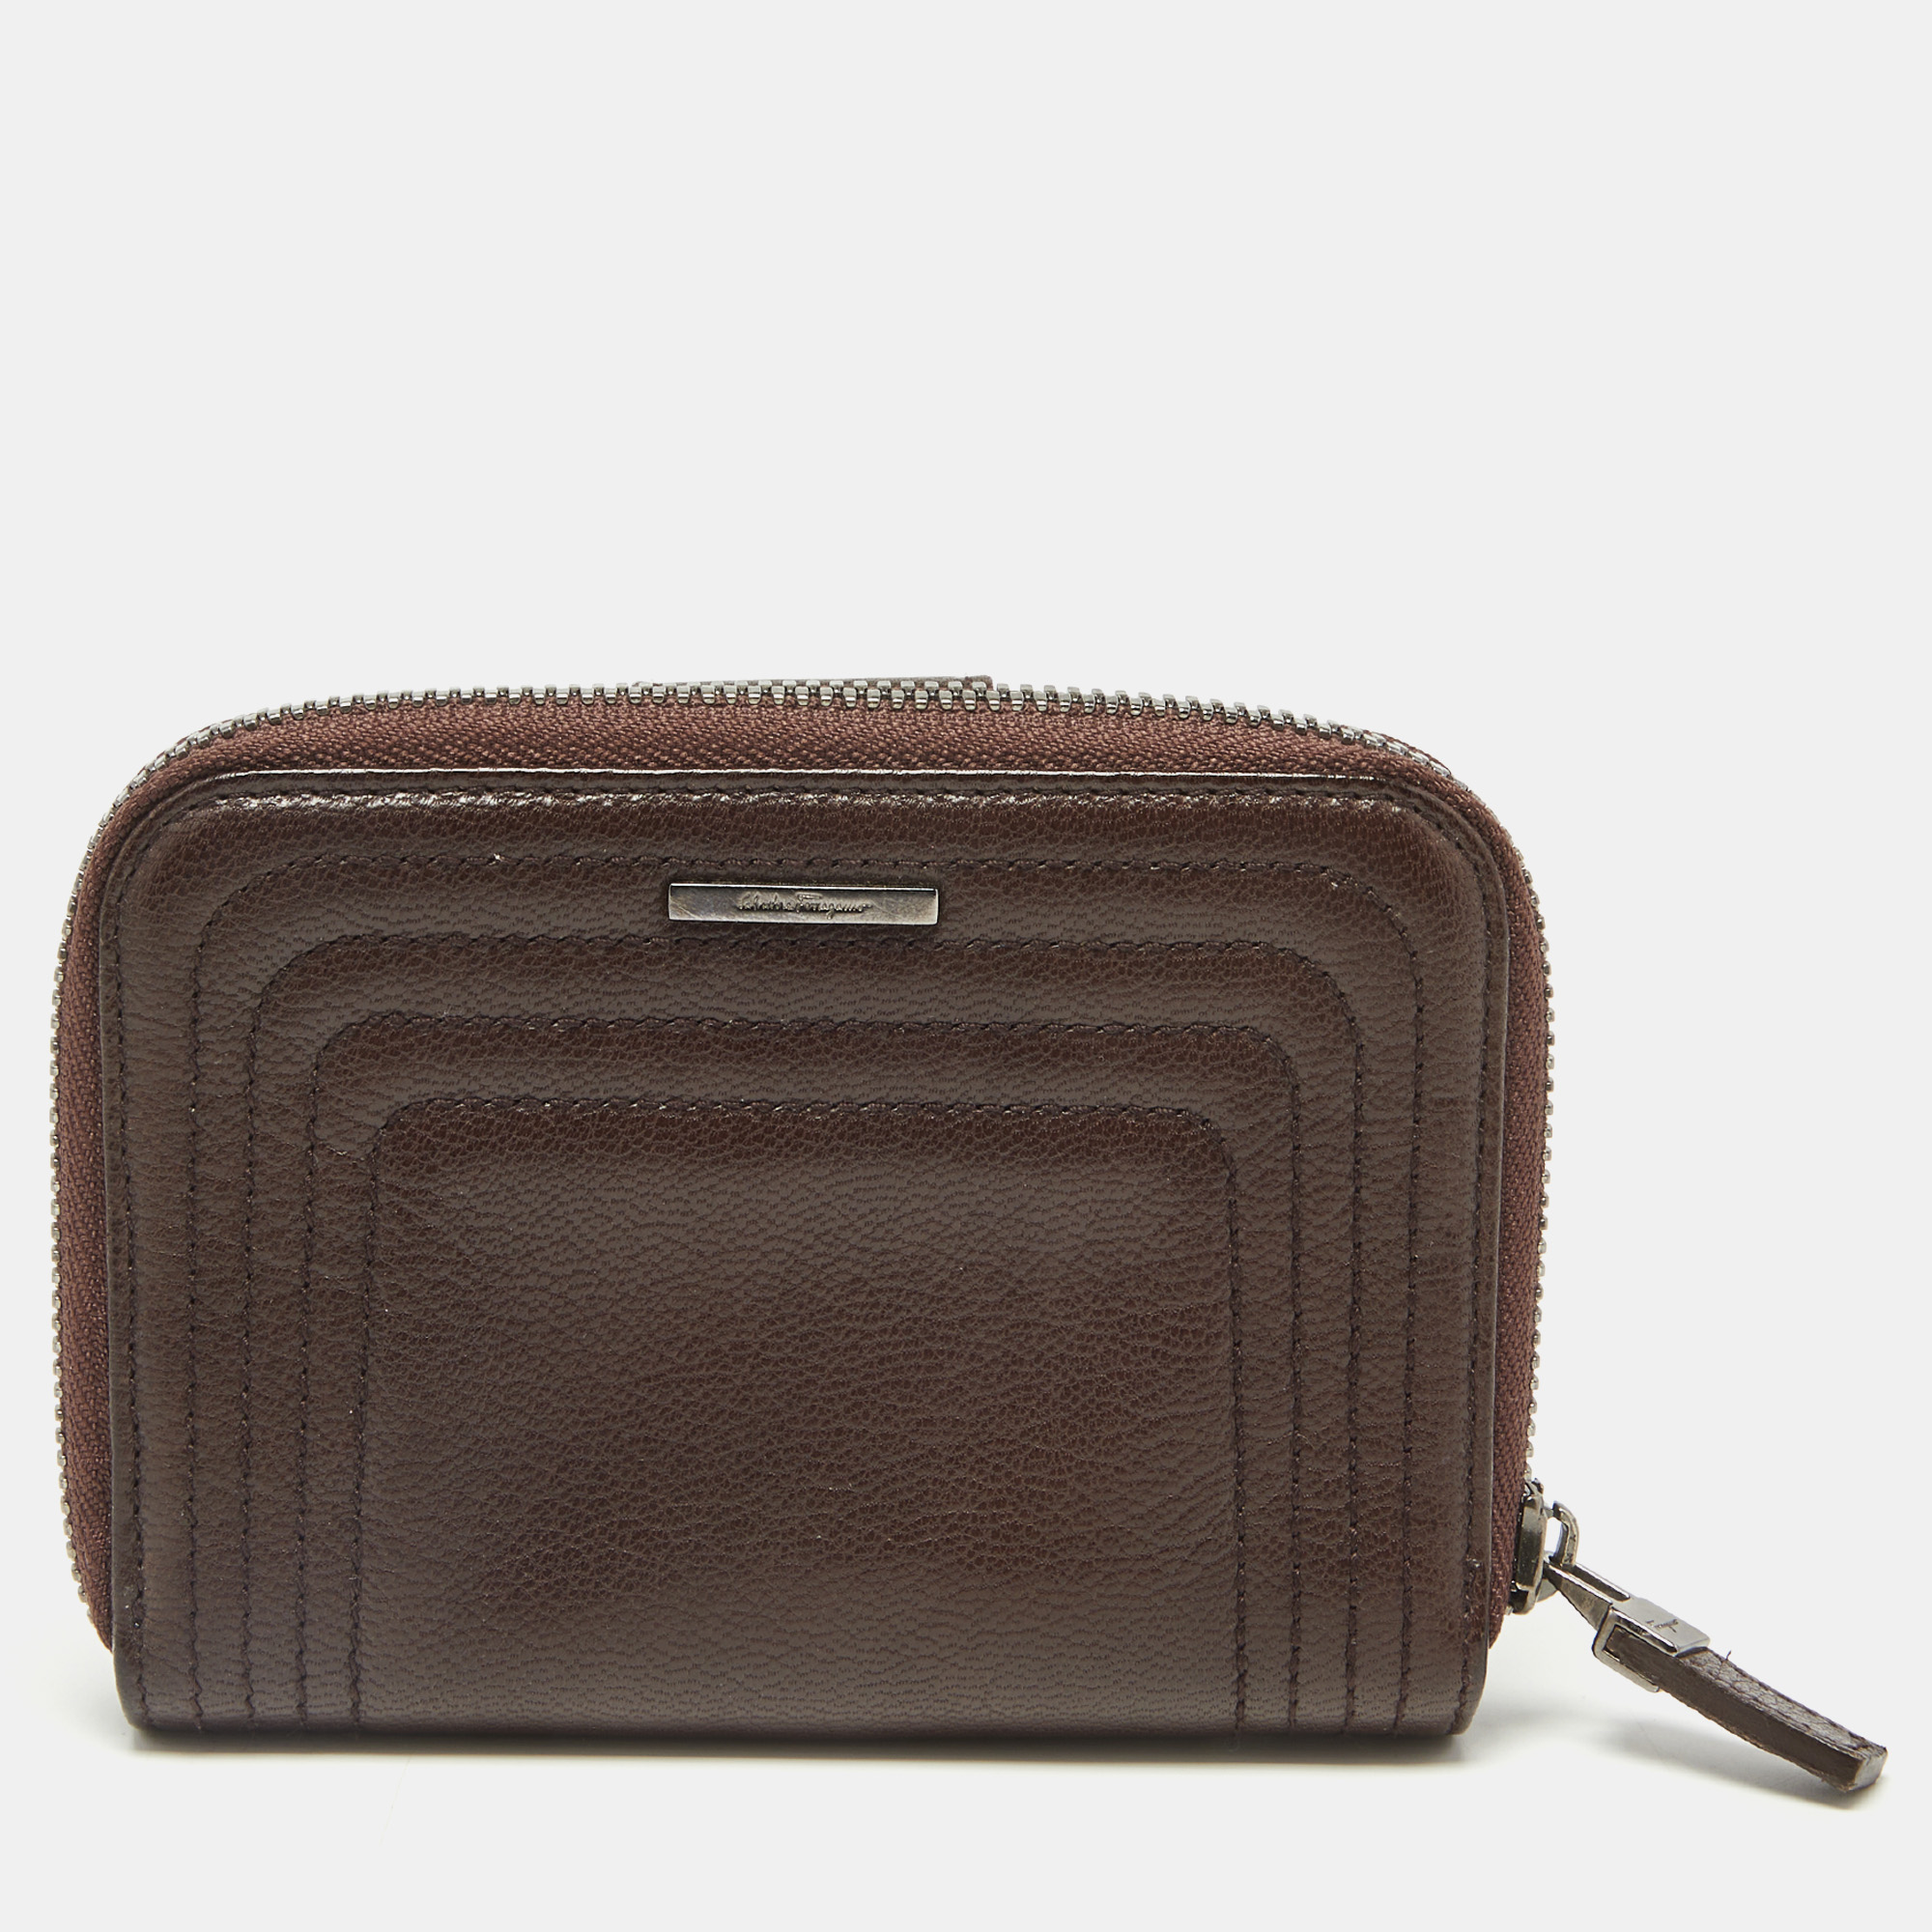 Pre-owned Ferragamo Dark Brown Leather Zip Around Compact Wallet